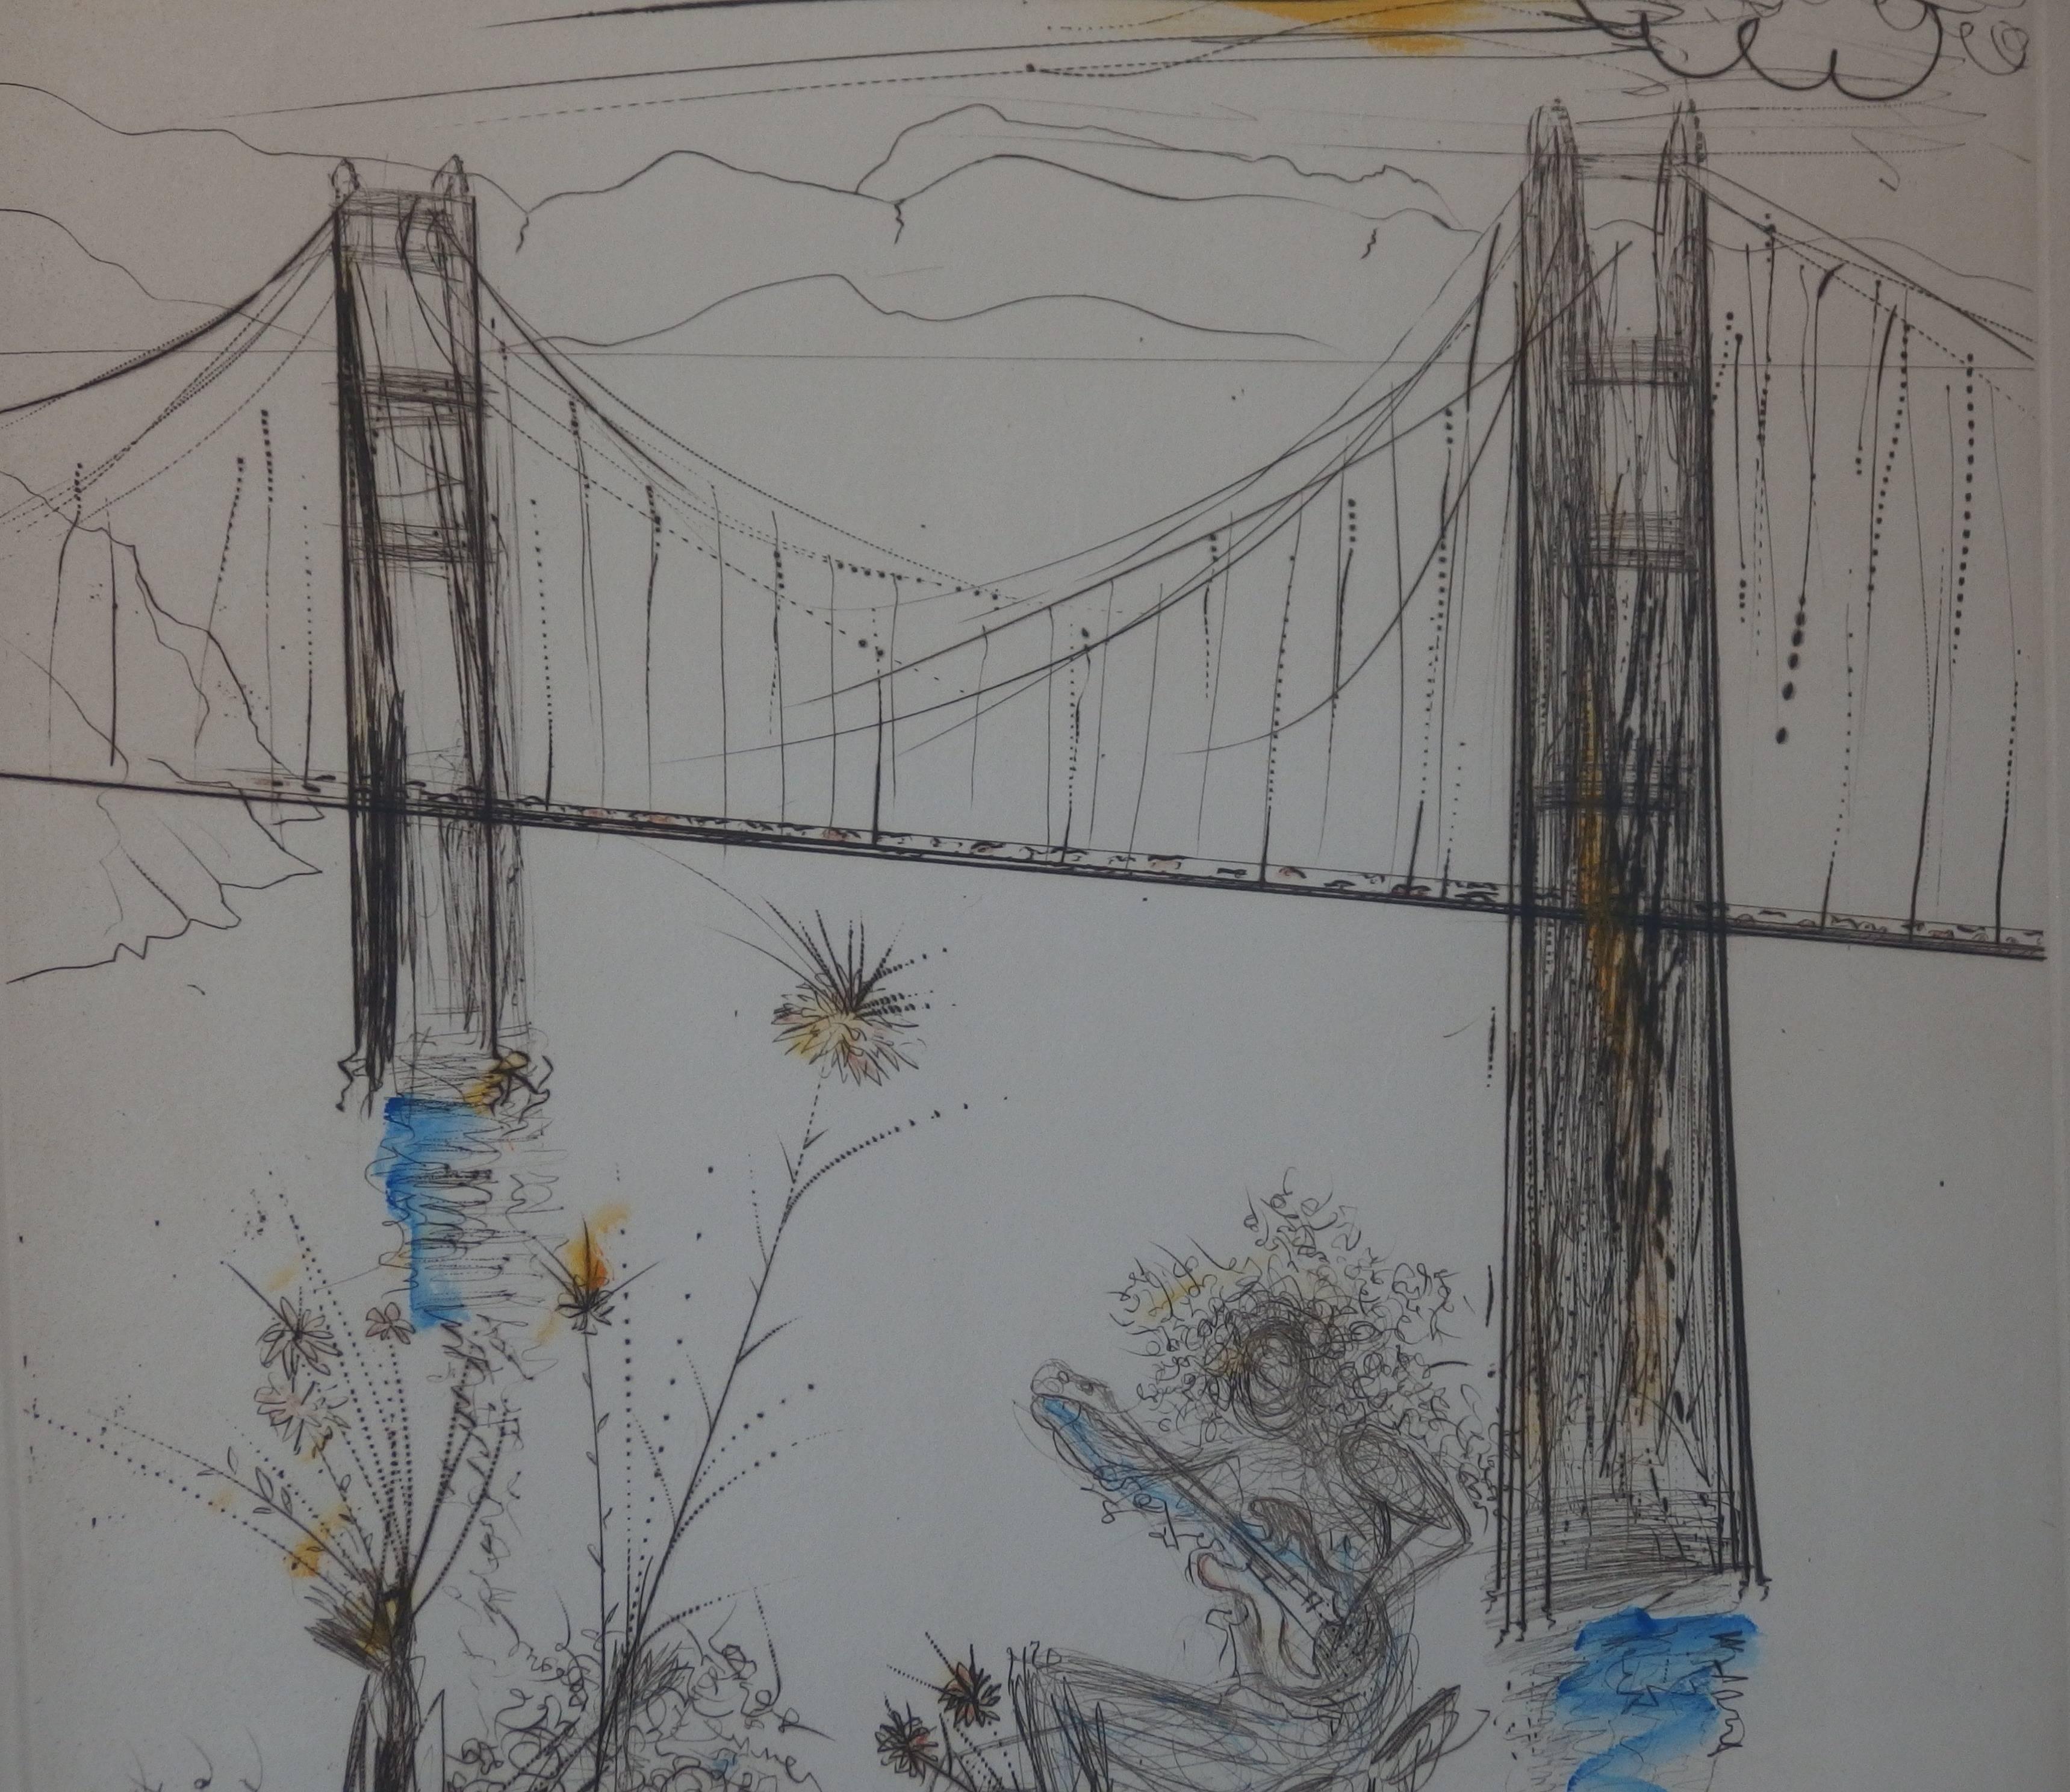 Salvador DALI
San Francisco : Golden Gate Bridge (c. 1970)

Original etching
Enterely handpainted (watercolor) by Dali
Handsigned and justified 